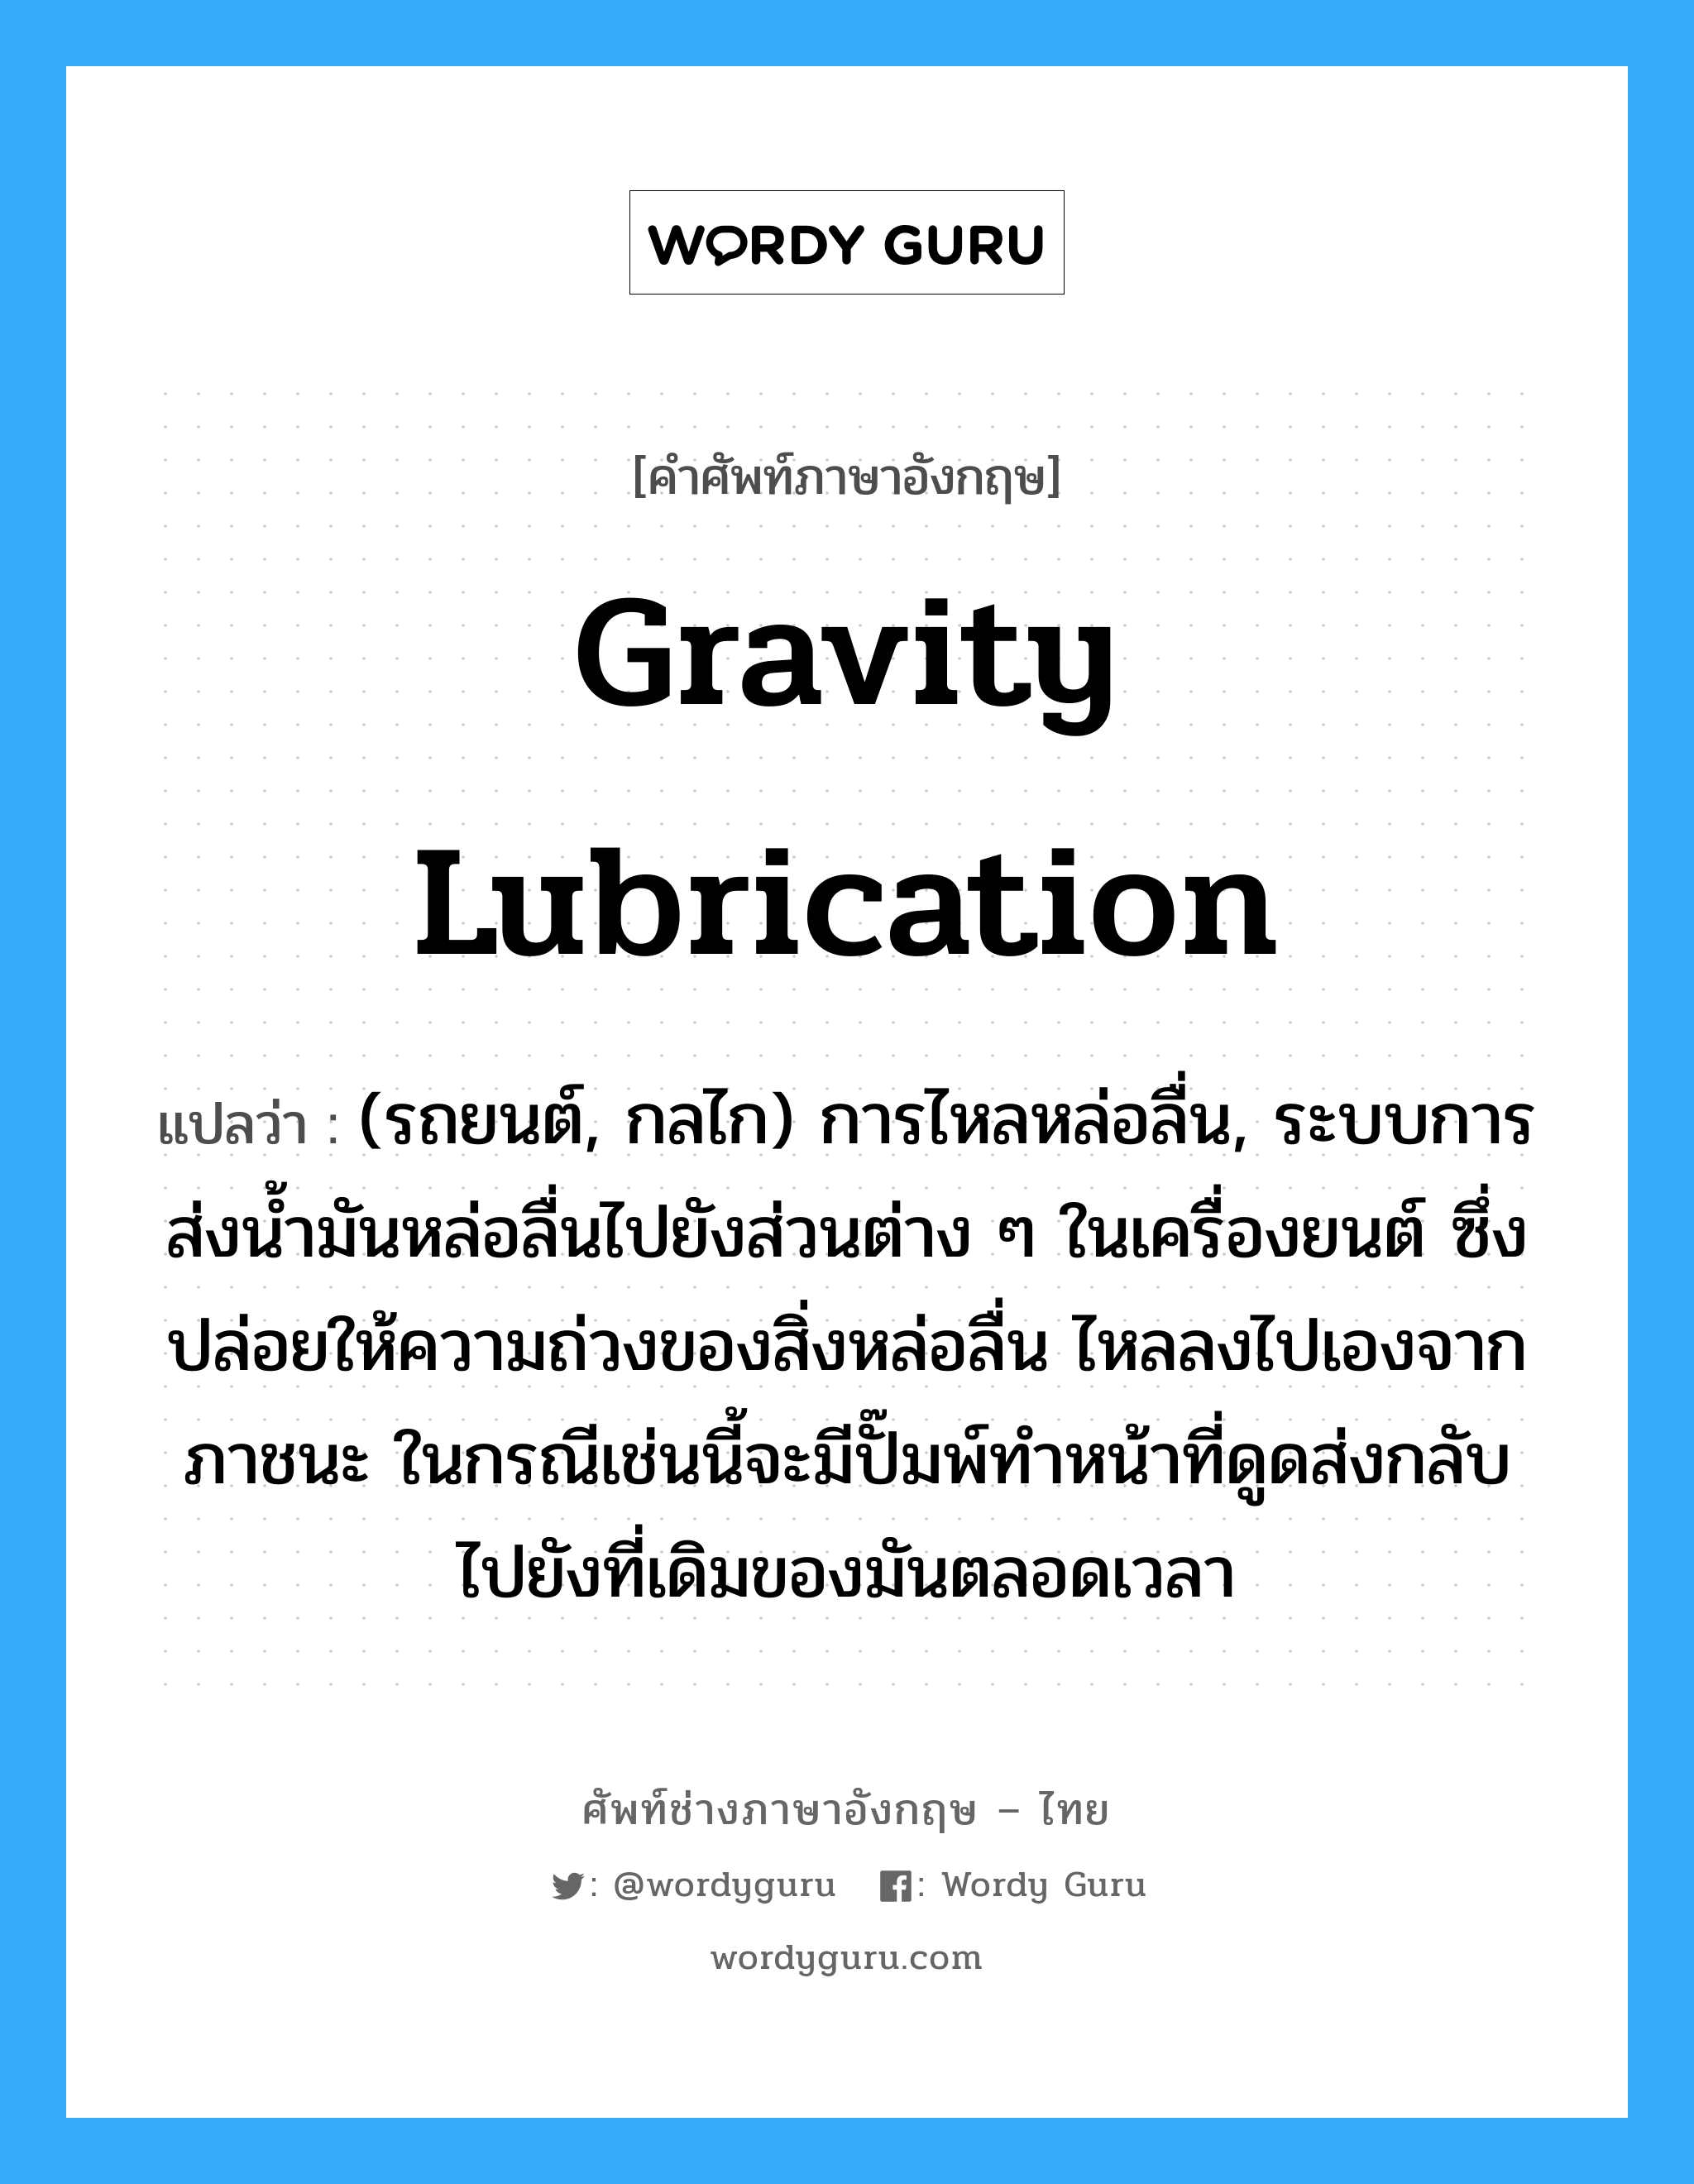 gravity lubrication แปลว่า?, คำศัพท์ช่างภาษาอังกฤษ - ไทย gravity lubrication คำศัพท์ภาษาอังกฤษ gravity lubrication แปลว่า (รถยนต์, กลไก) การไหลหล่อลื่น, ระบบการส่งน้ำมันหล่อลื่นไปยังส่วนต่าง ๆ ในเครื่องยนต์ ซึ่งปล่อยให้ความถ่วงของสิ่งหล่อลื่น ไหลลงไปเองจากภาชนะ ในกรณีเช่นนี้จะมีปั๊มพ์ทำหน้าที่ดูดส่งกลับไปยังที่เดิมของมันตลอดเวลา